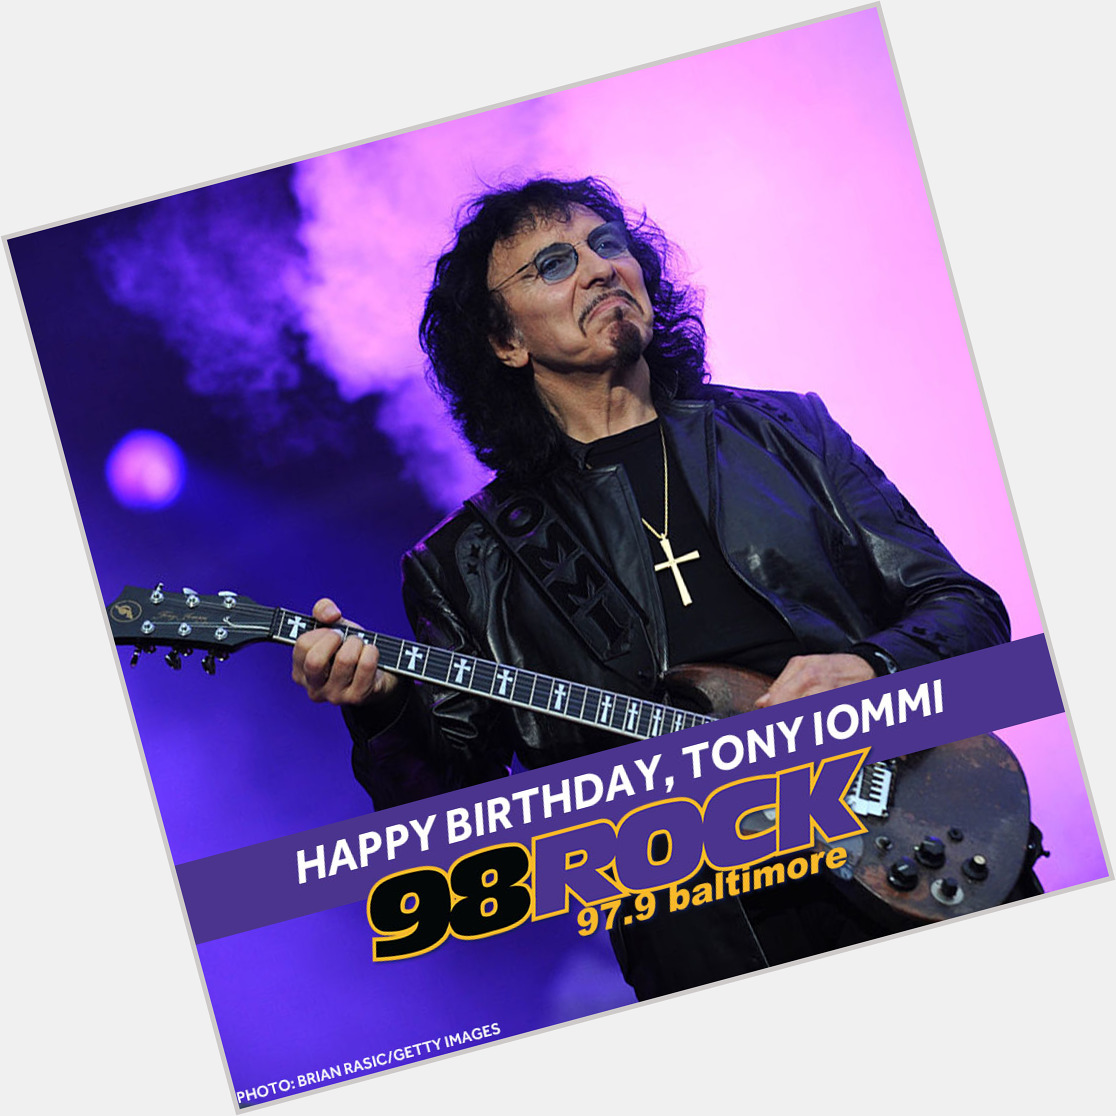 Tony Iommi from Black Sabbath is 74 today! Wish him a big Happy Birthday 